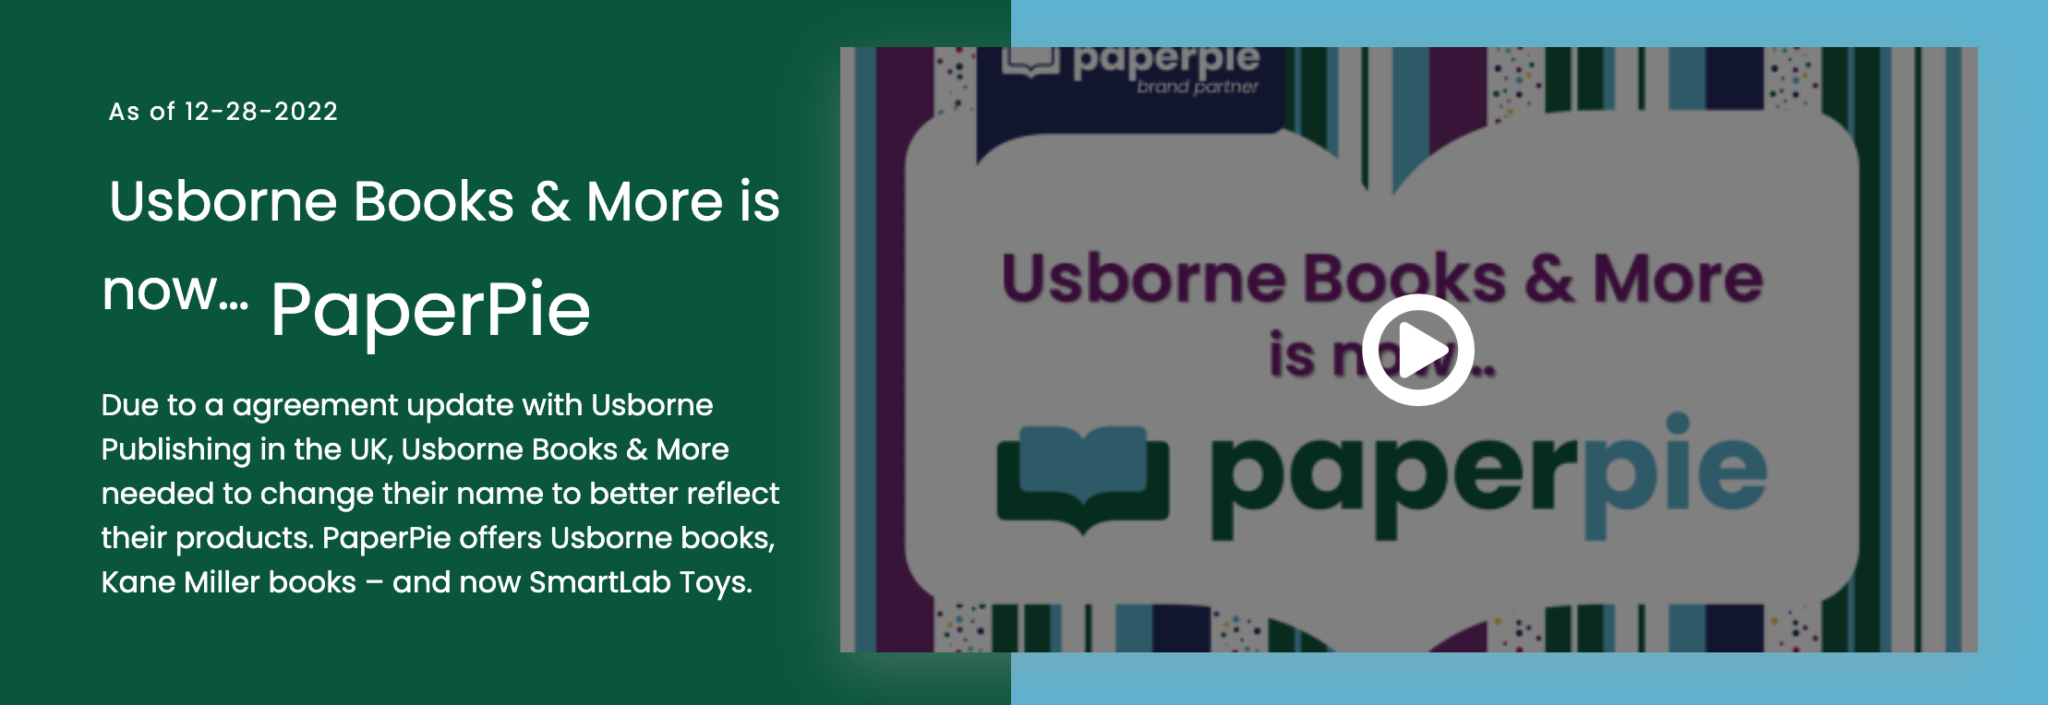 usborne books name change to PaperPie